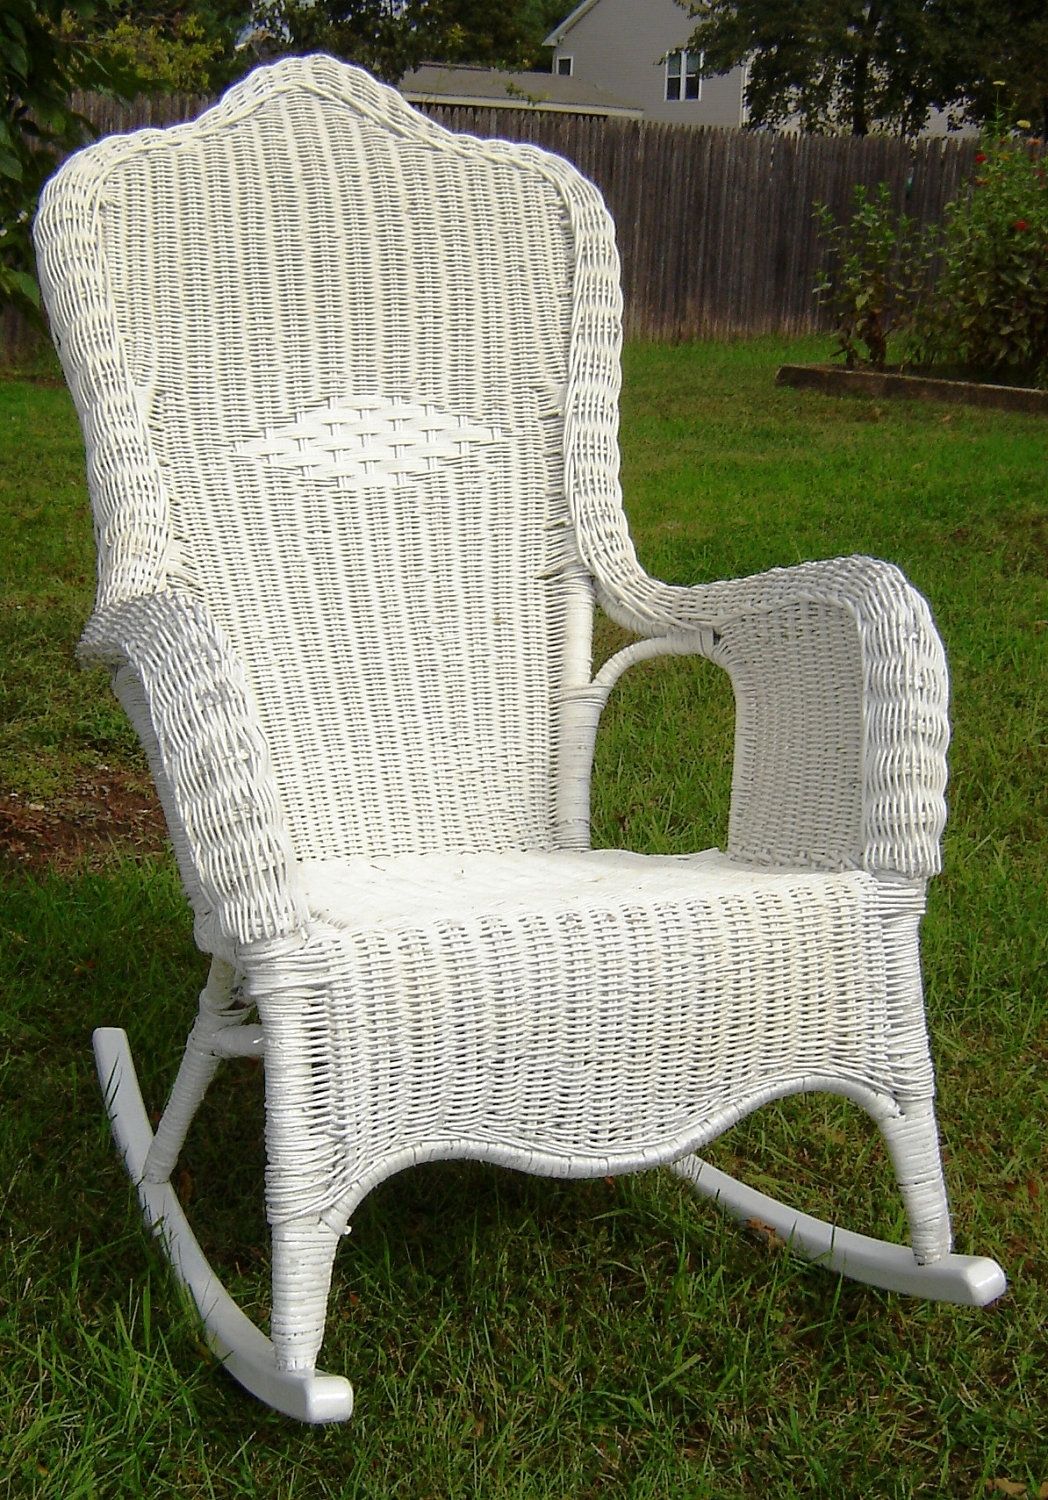 Antique Wicker Rocking Chairs Regarding 2018 Chair Design Ideas Best Vintage Wicker Chairs Home Antique Cane (View 5 of 20)